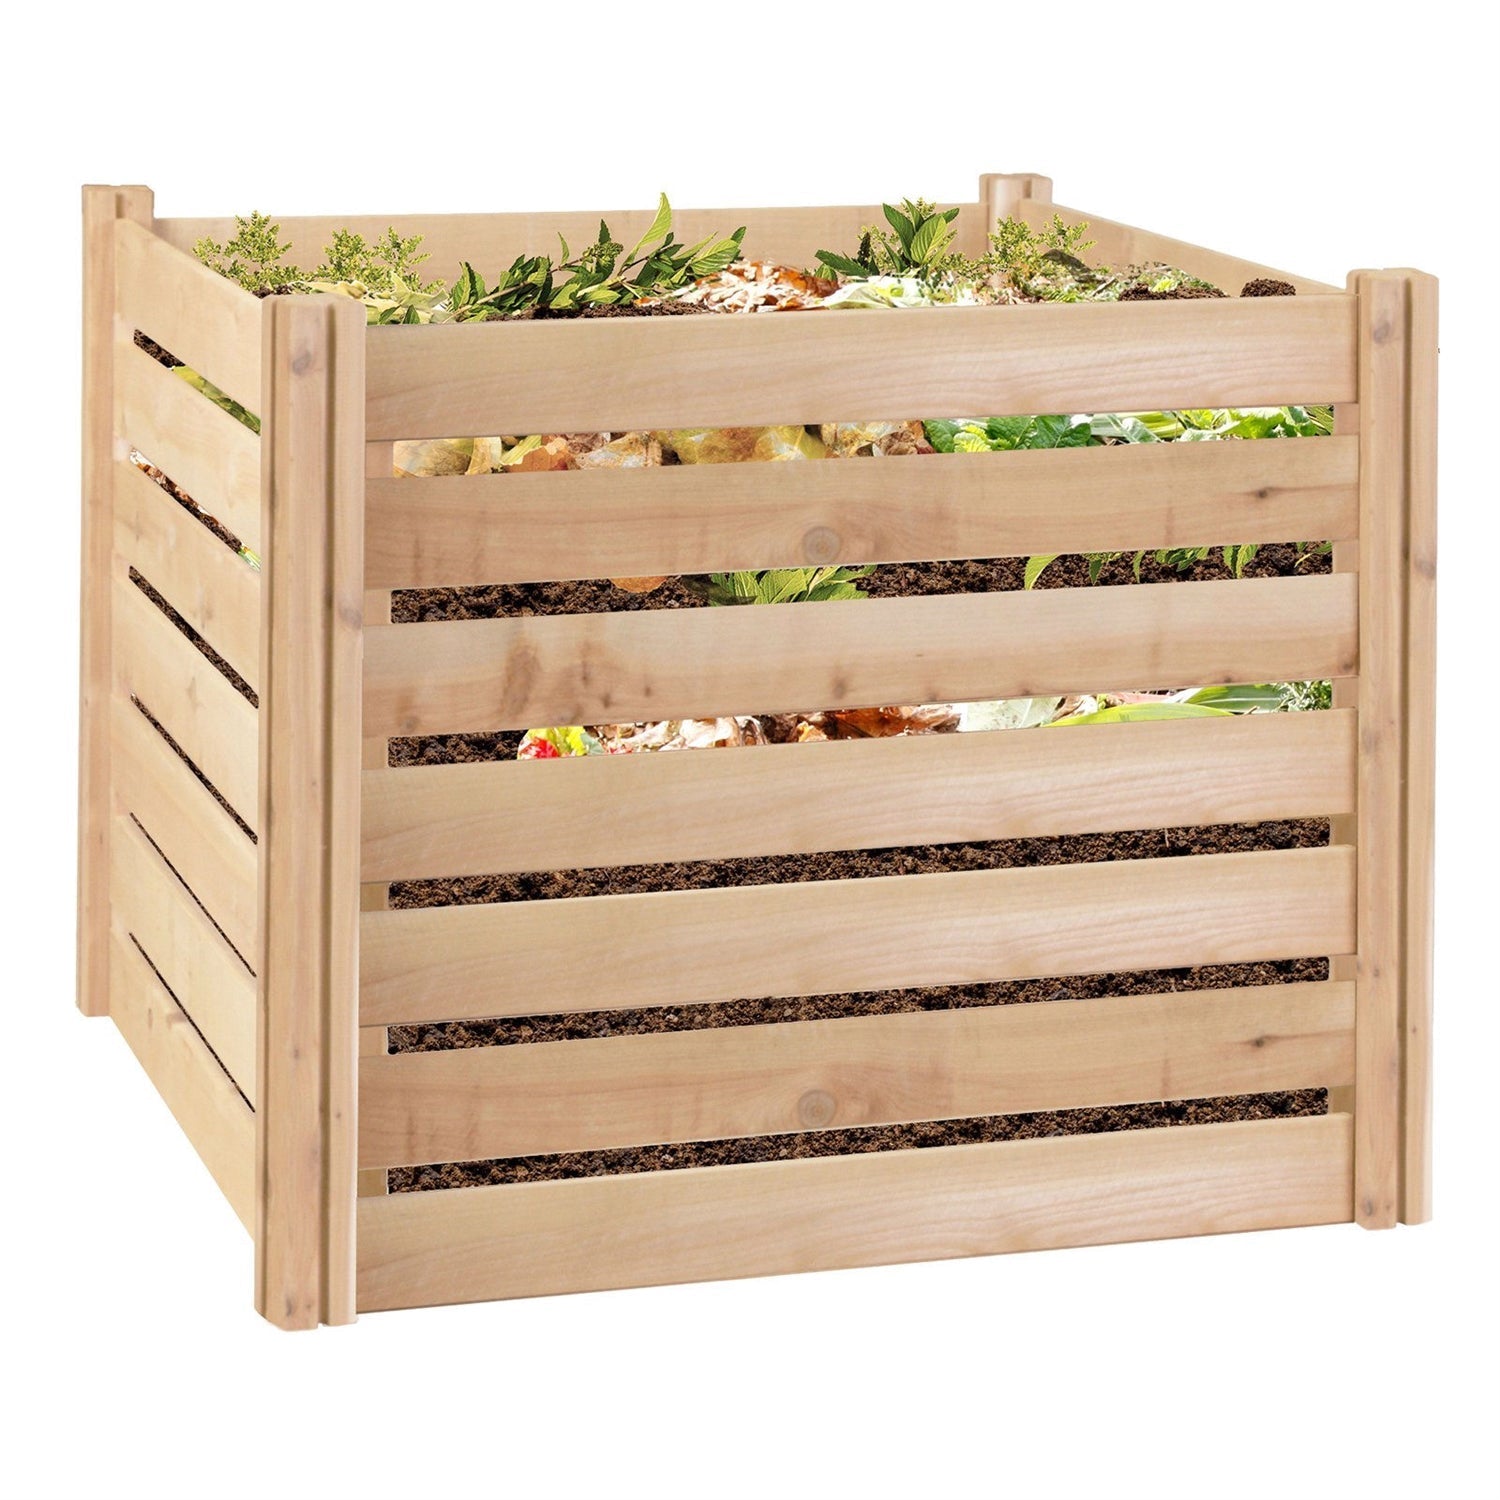 Outdoor > Gardening > Compost Bins - Outdoor 174-Gallon Wooden Compost Bin Made From Eco-Friendly Cedar Wood